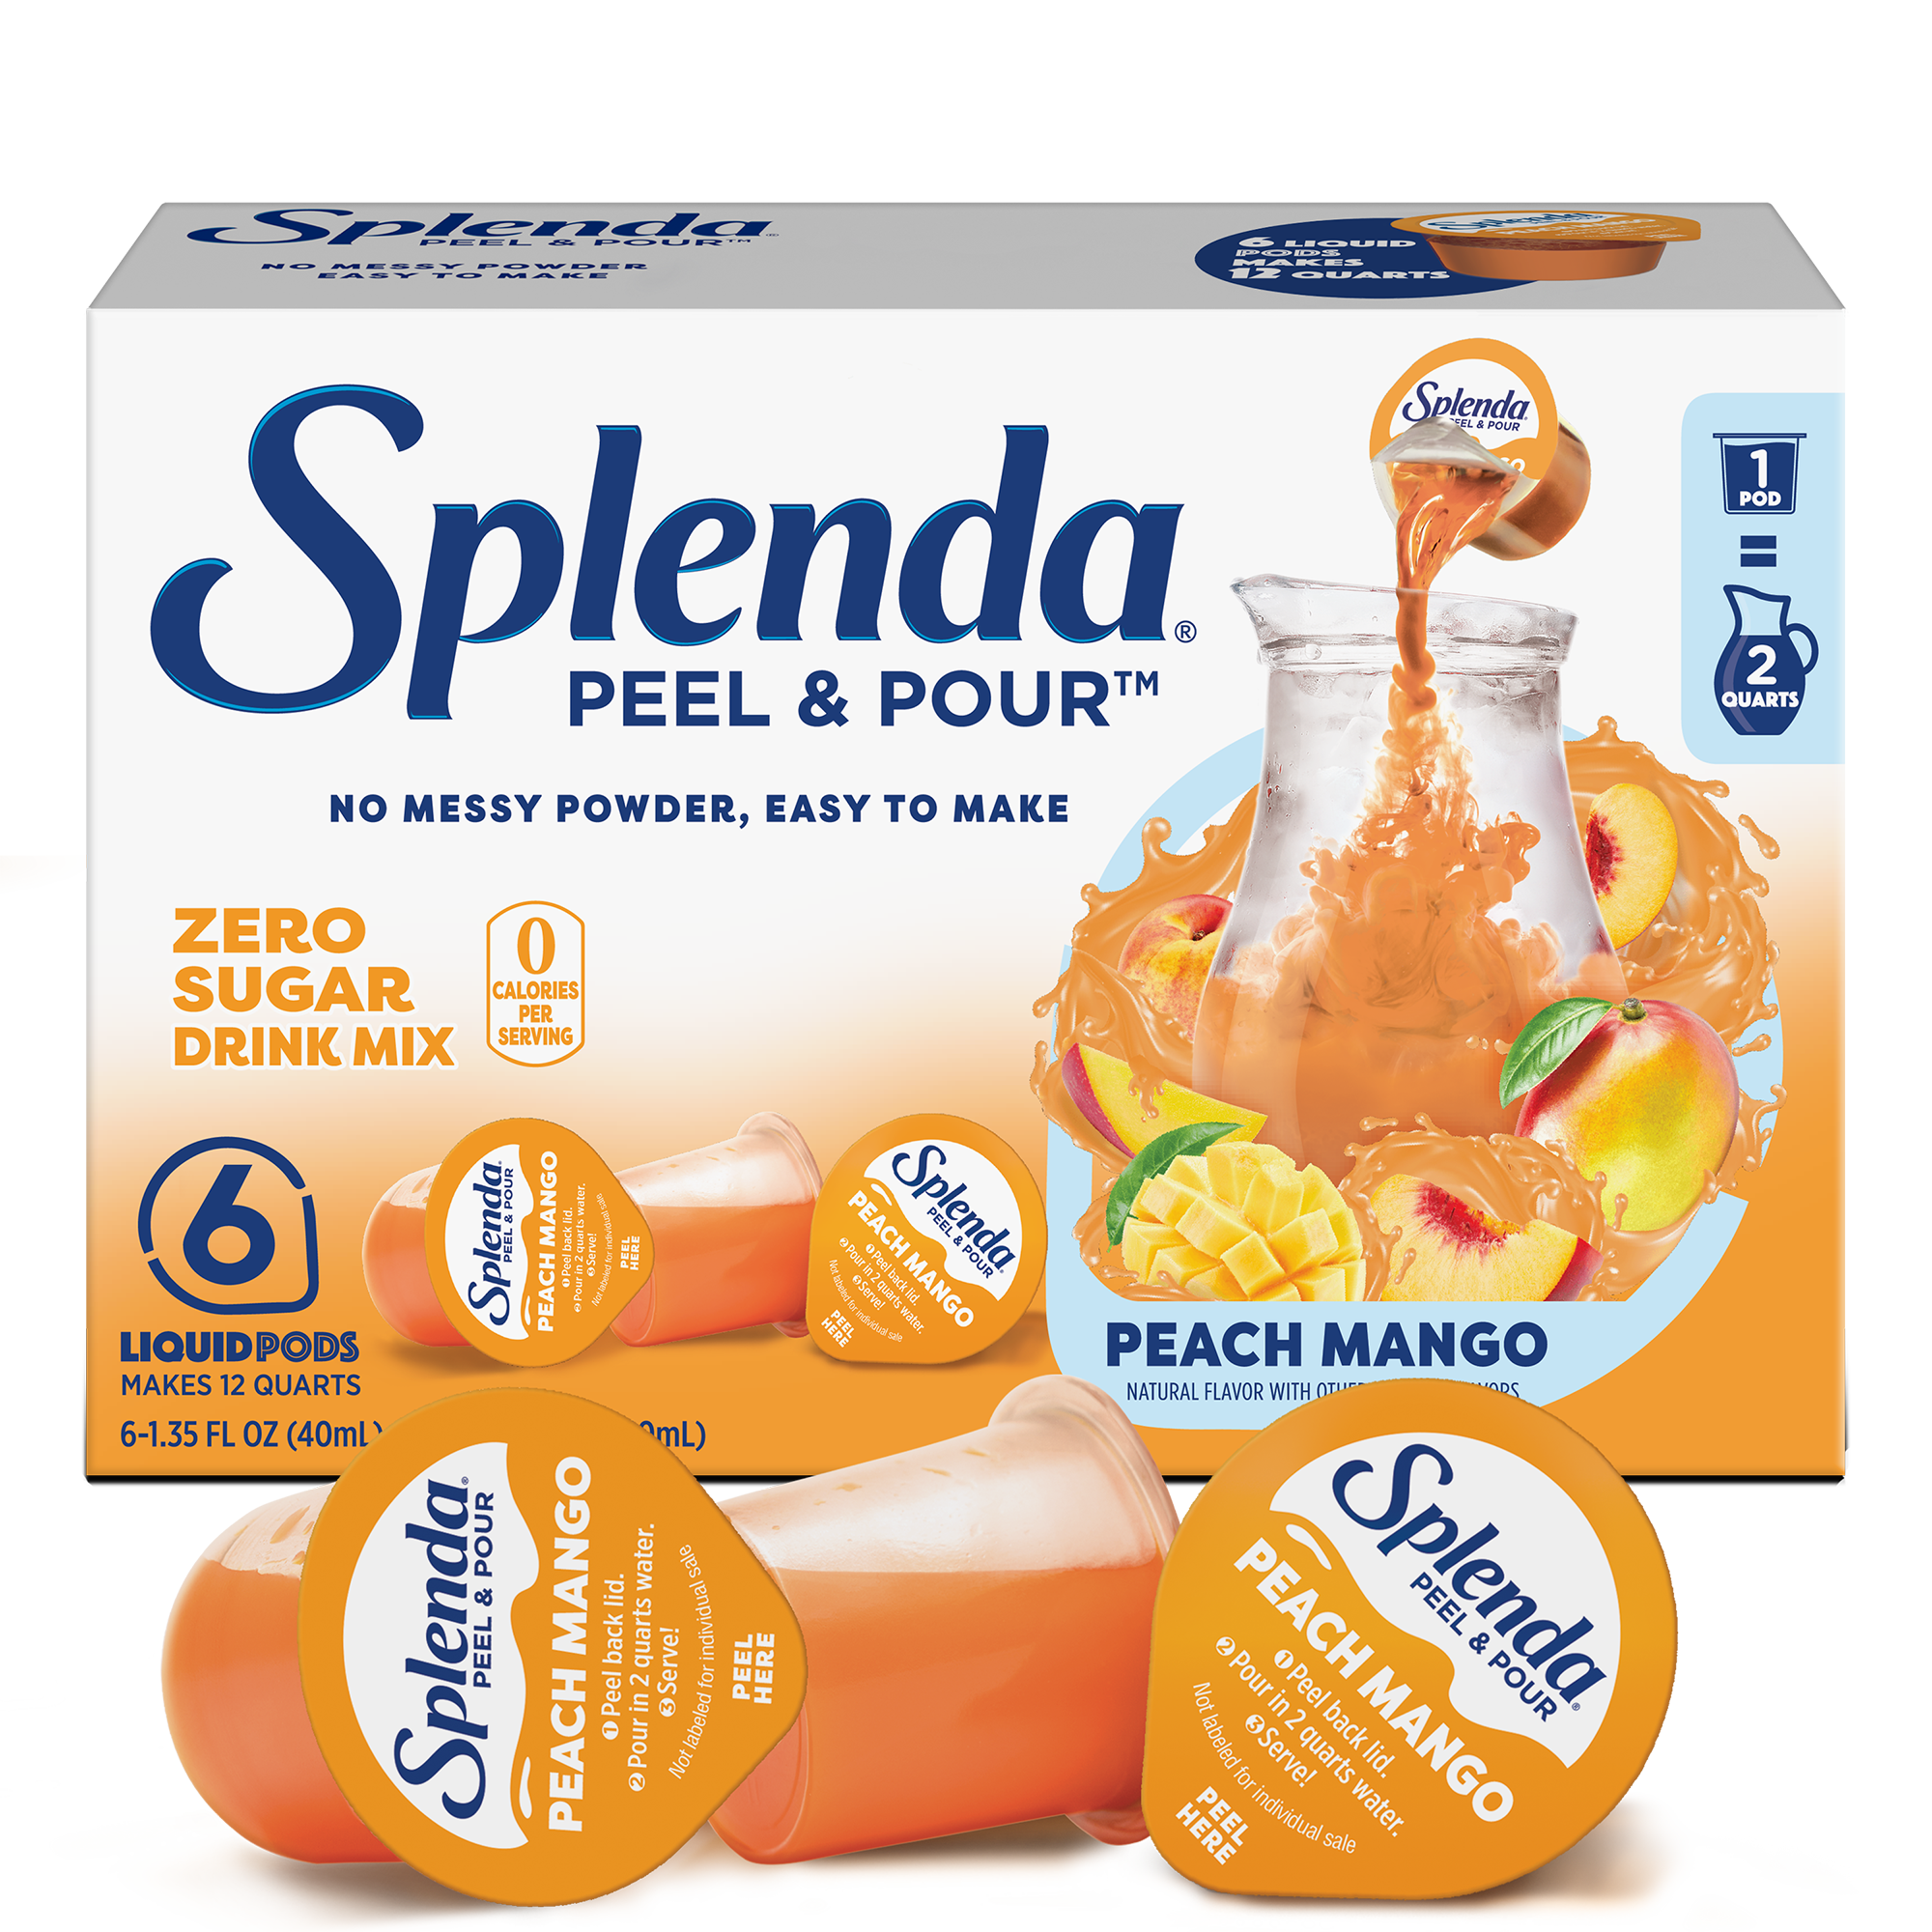 Splenda Peel & Pour Peach Mango Zero Sugar Drink Mix – Front